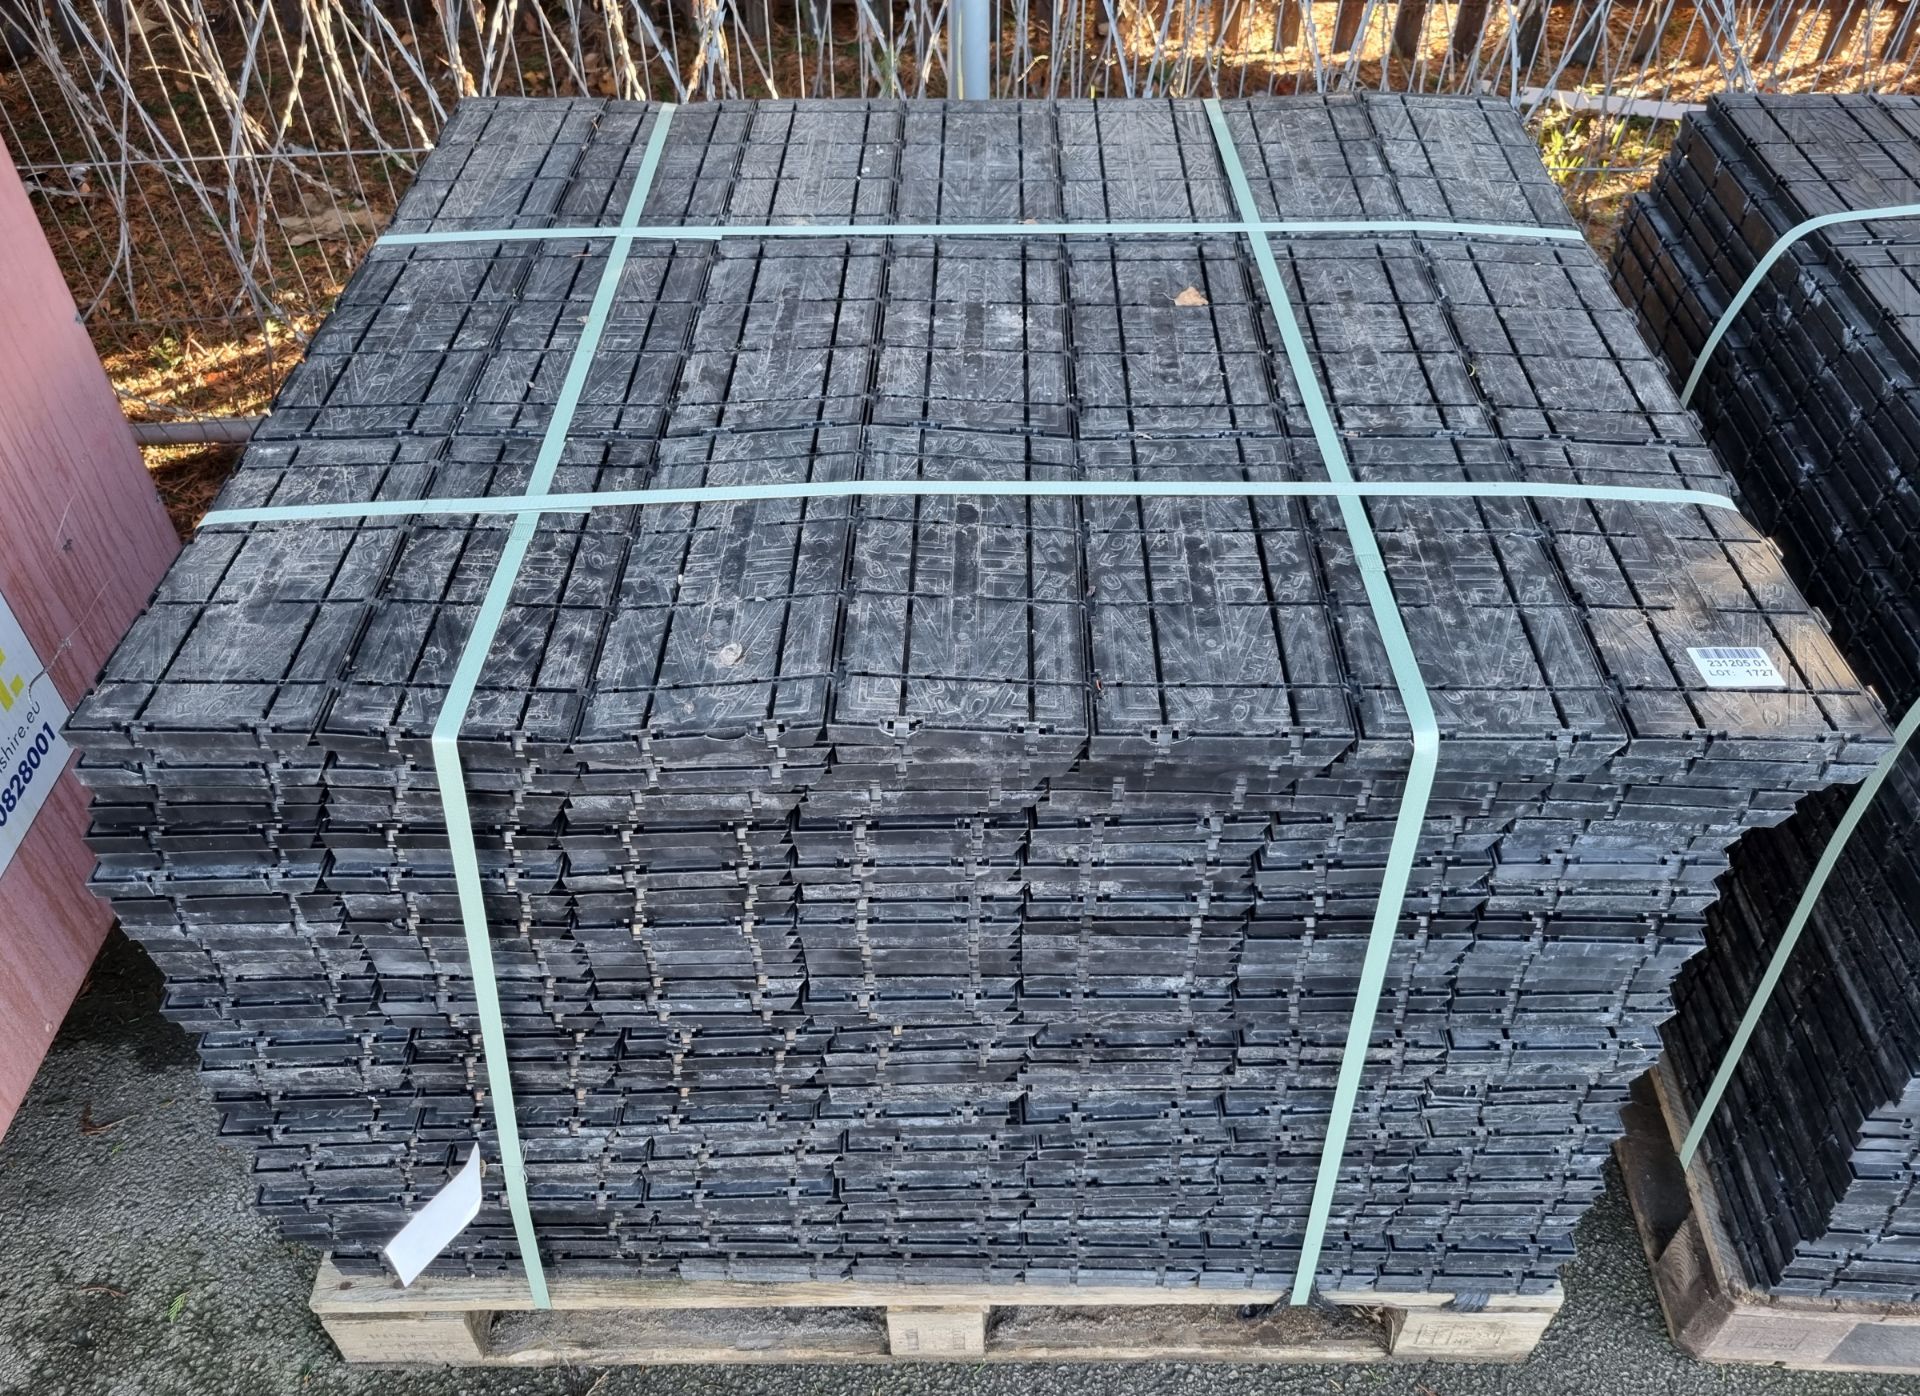 Rola-trac black plastic interlocking floor panels - 40 sheets - 1 m squared per sheet - Image 2 of 2